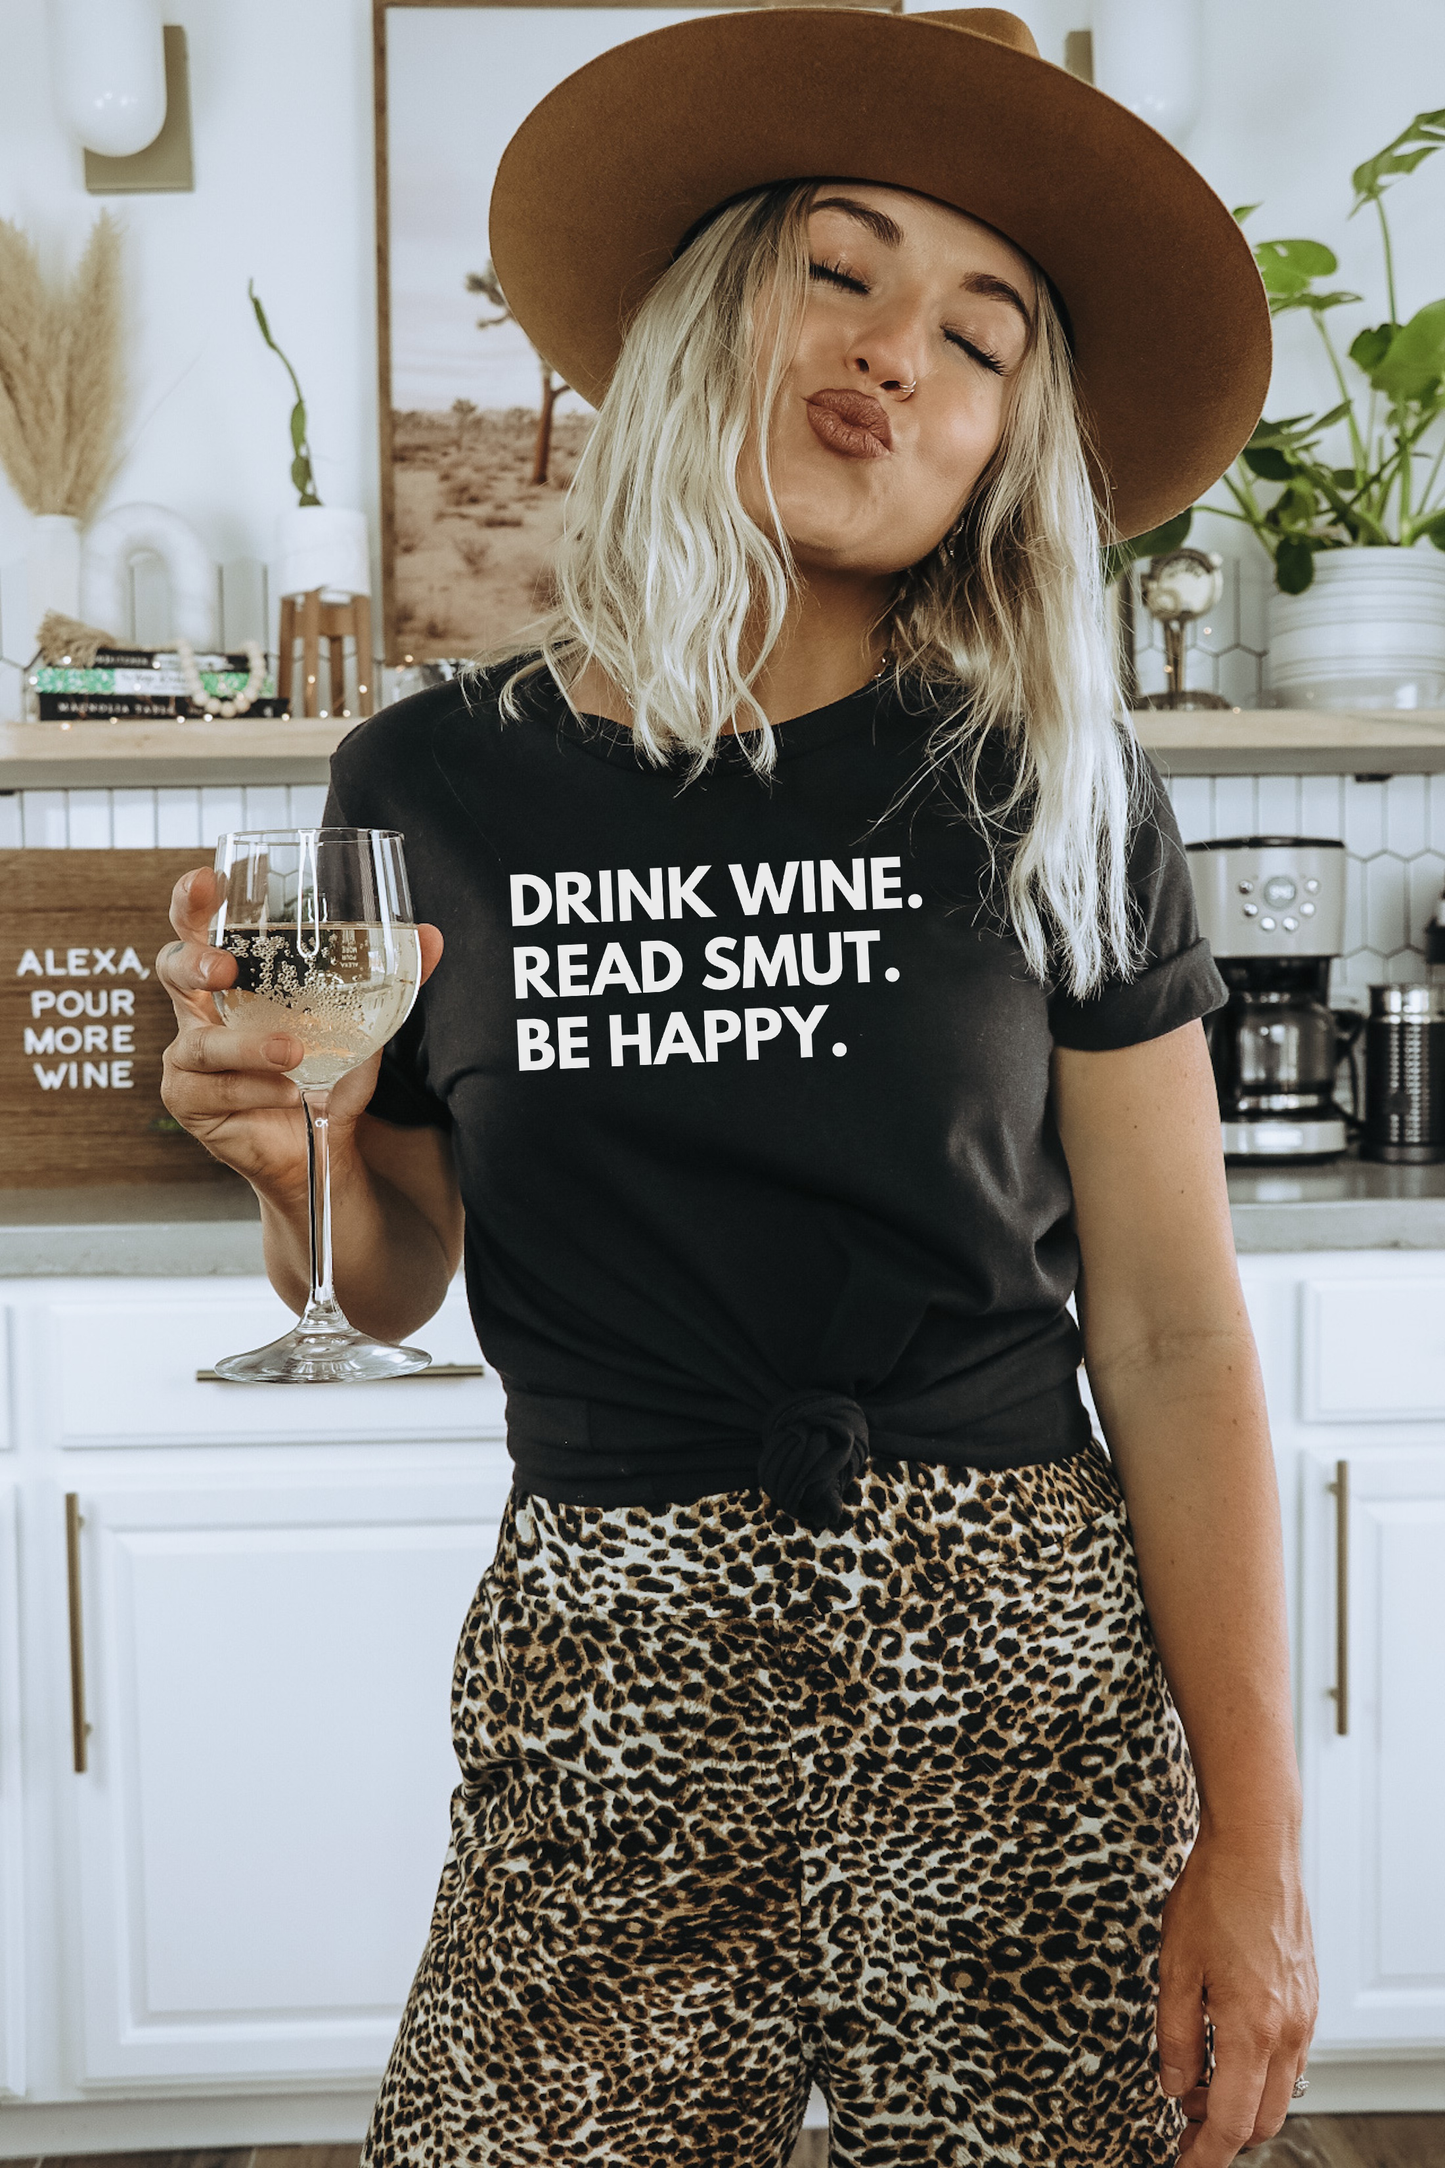 drink wine t-shirt